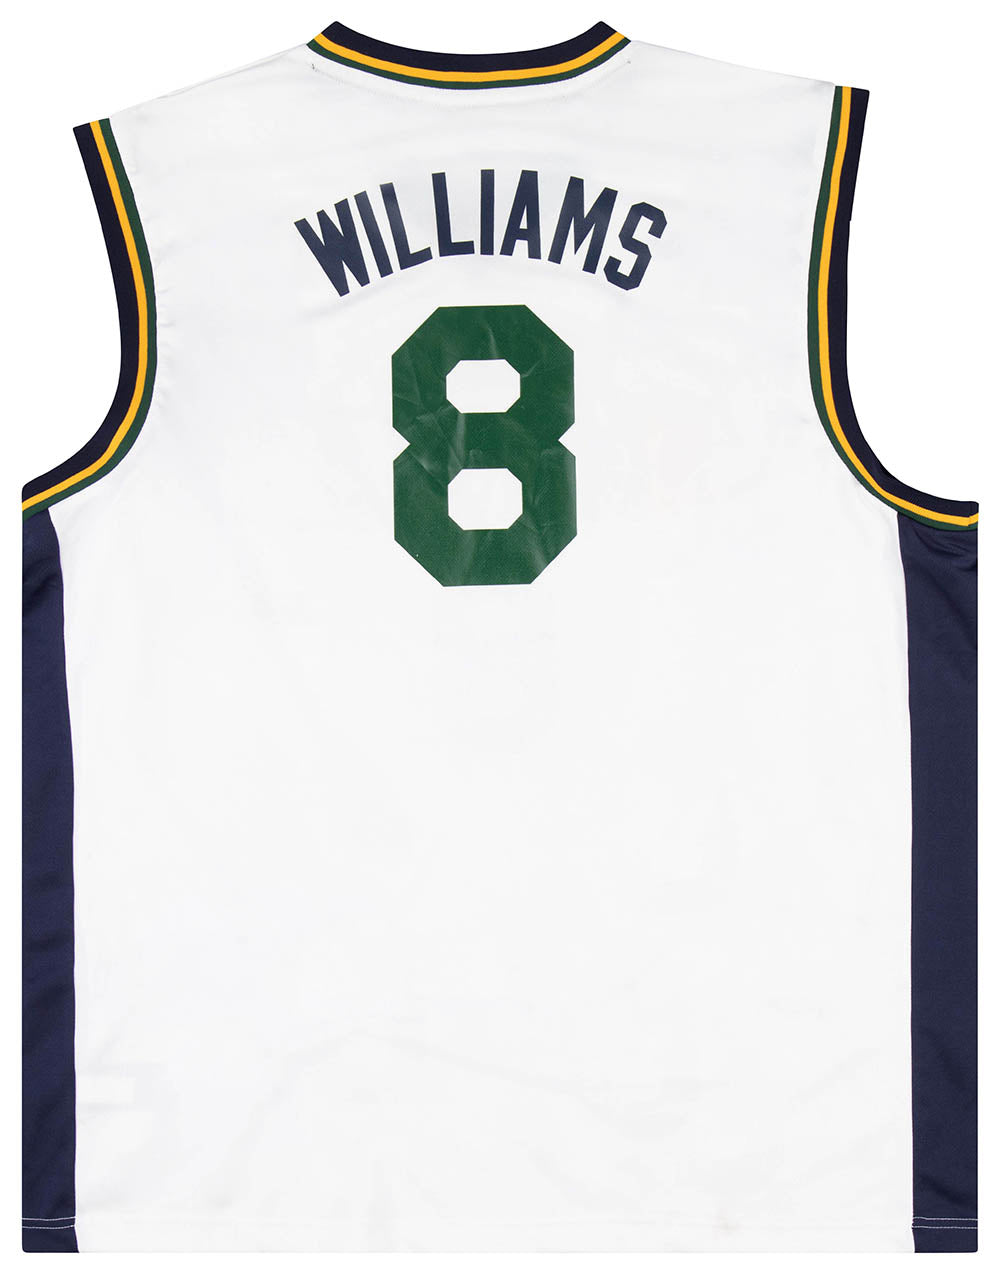 adidas, Shirts, Utah Jazz Nba Deron Williams 8 Jersey Adidas Size Xl Blue  Jersey